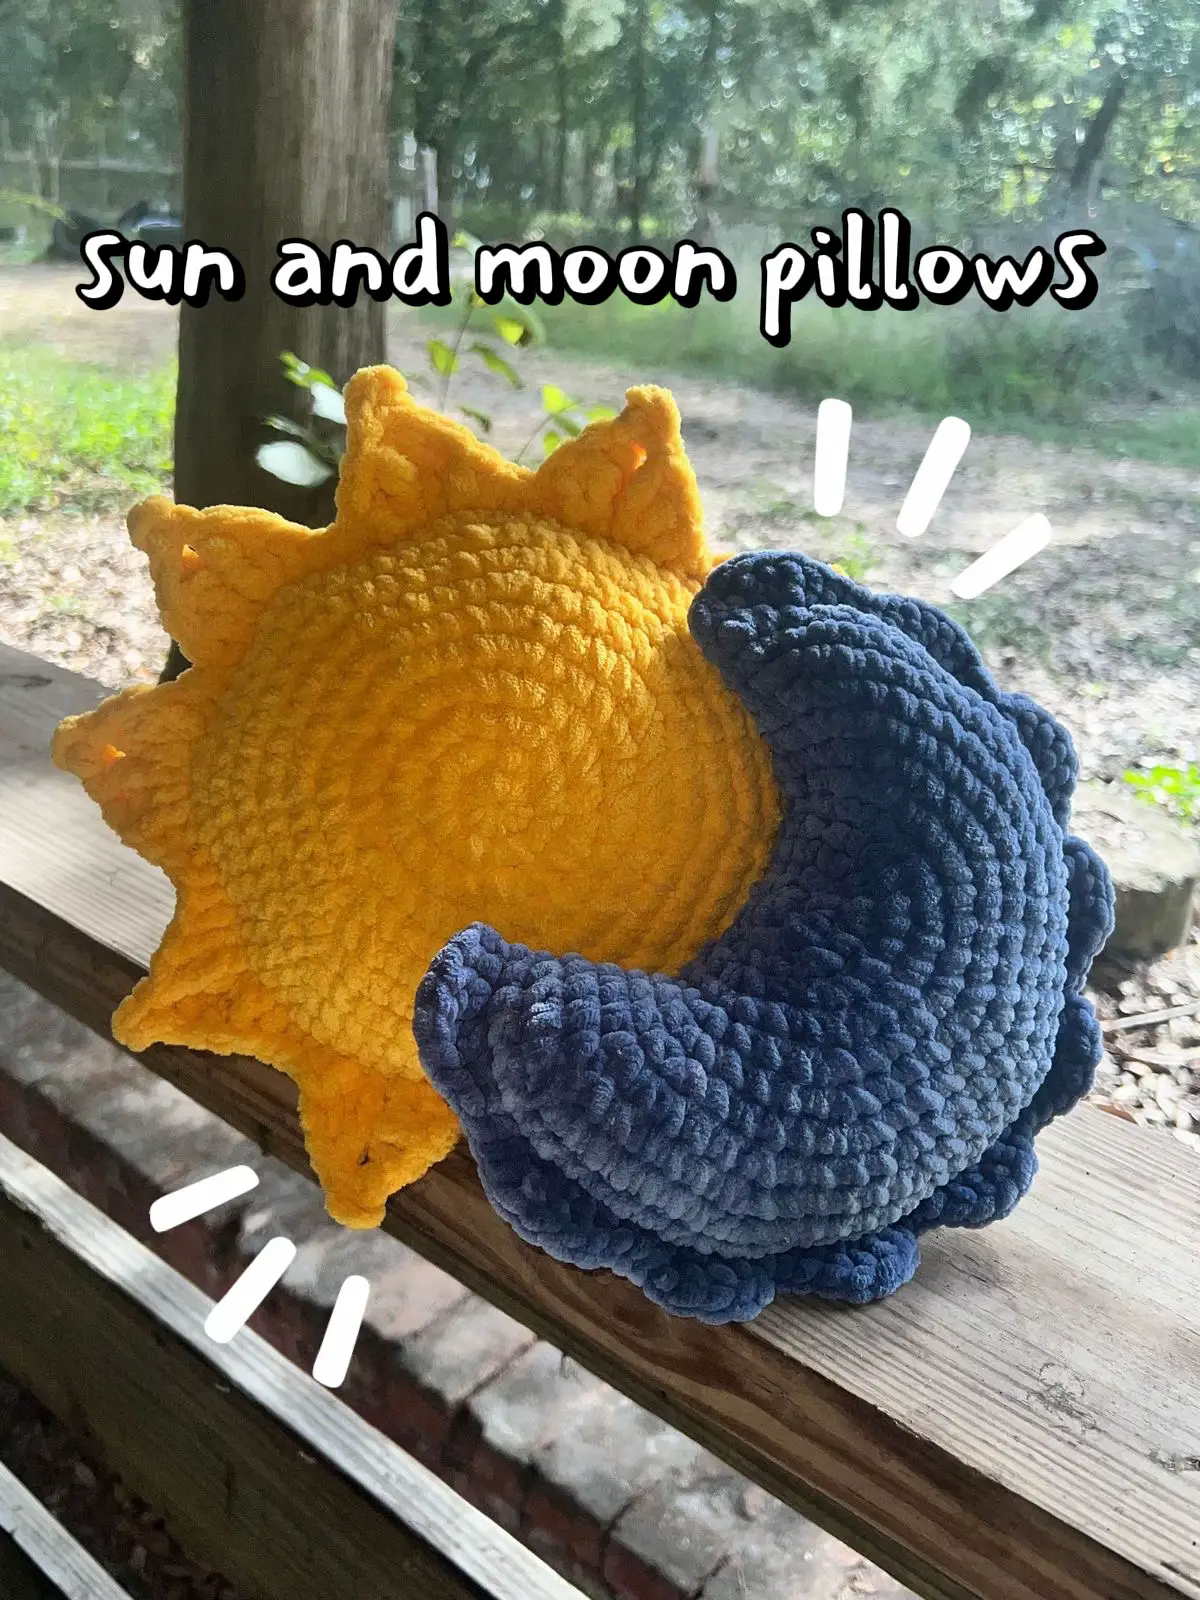 Free Crochet Patterns for Winter Accessories - Lemon8 Search